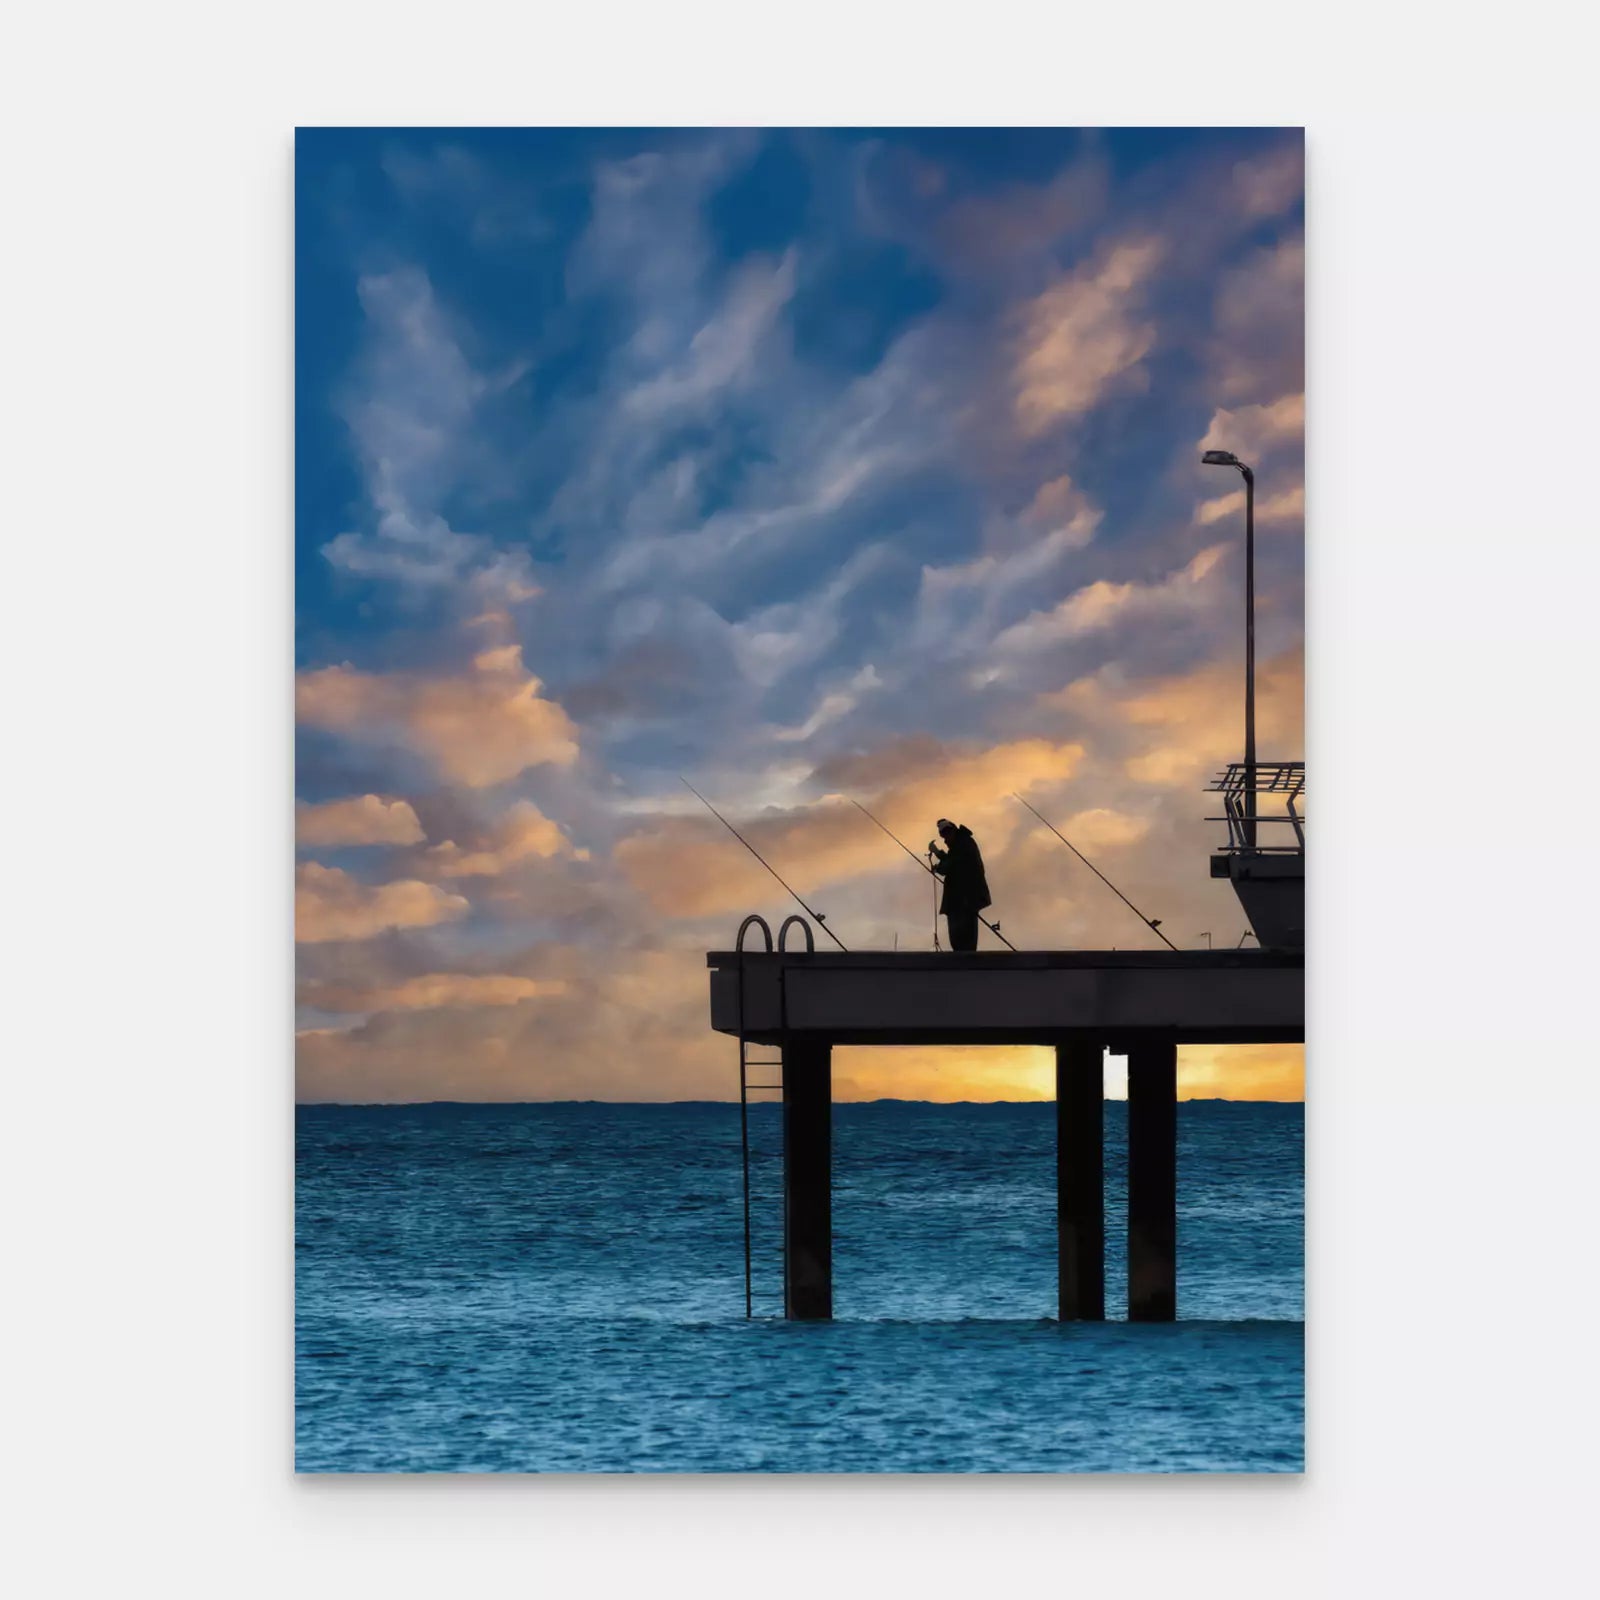 Lorne Beach - Australia (Portrait Edition)